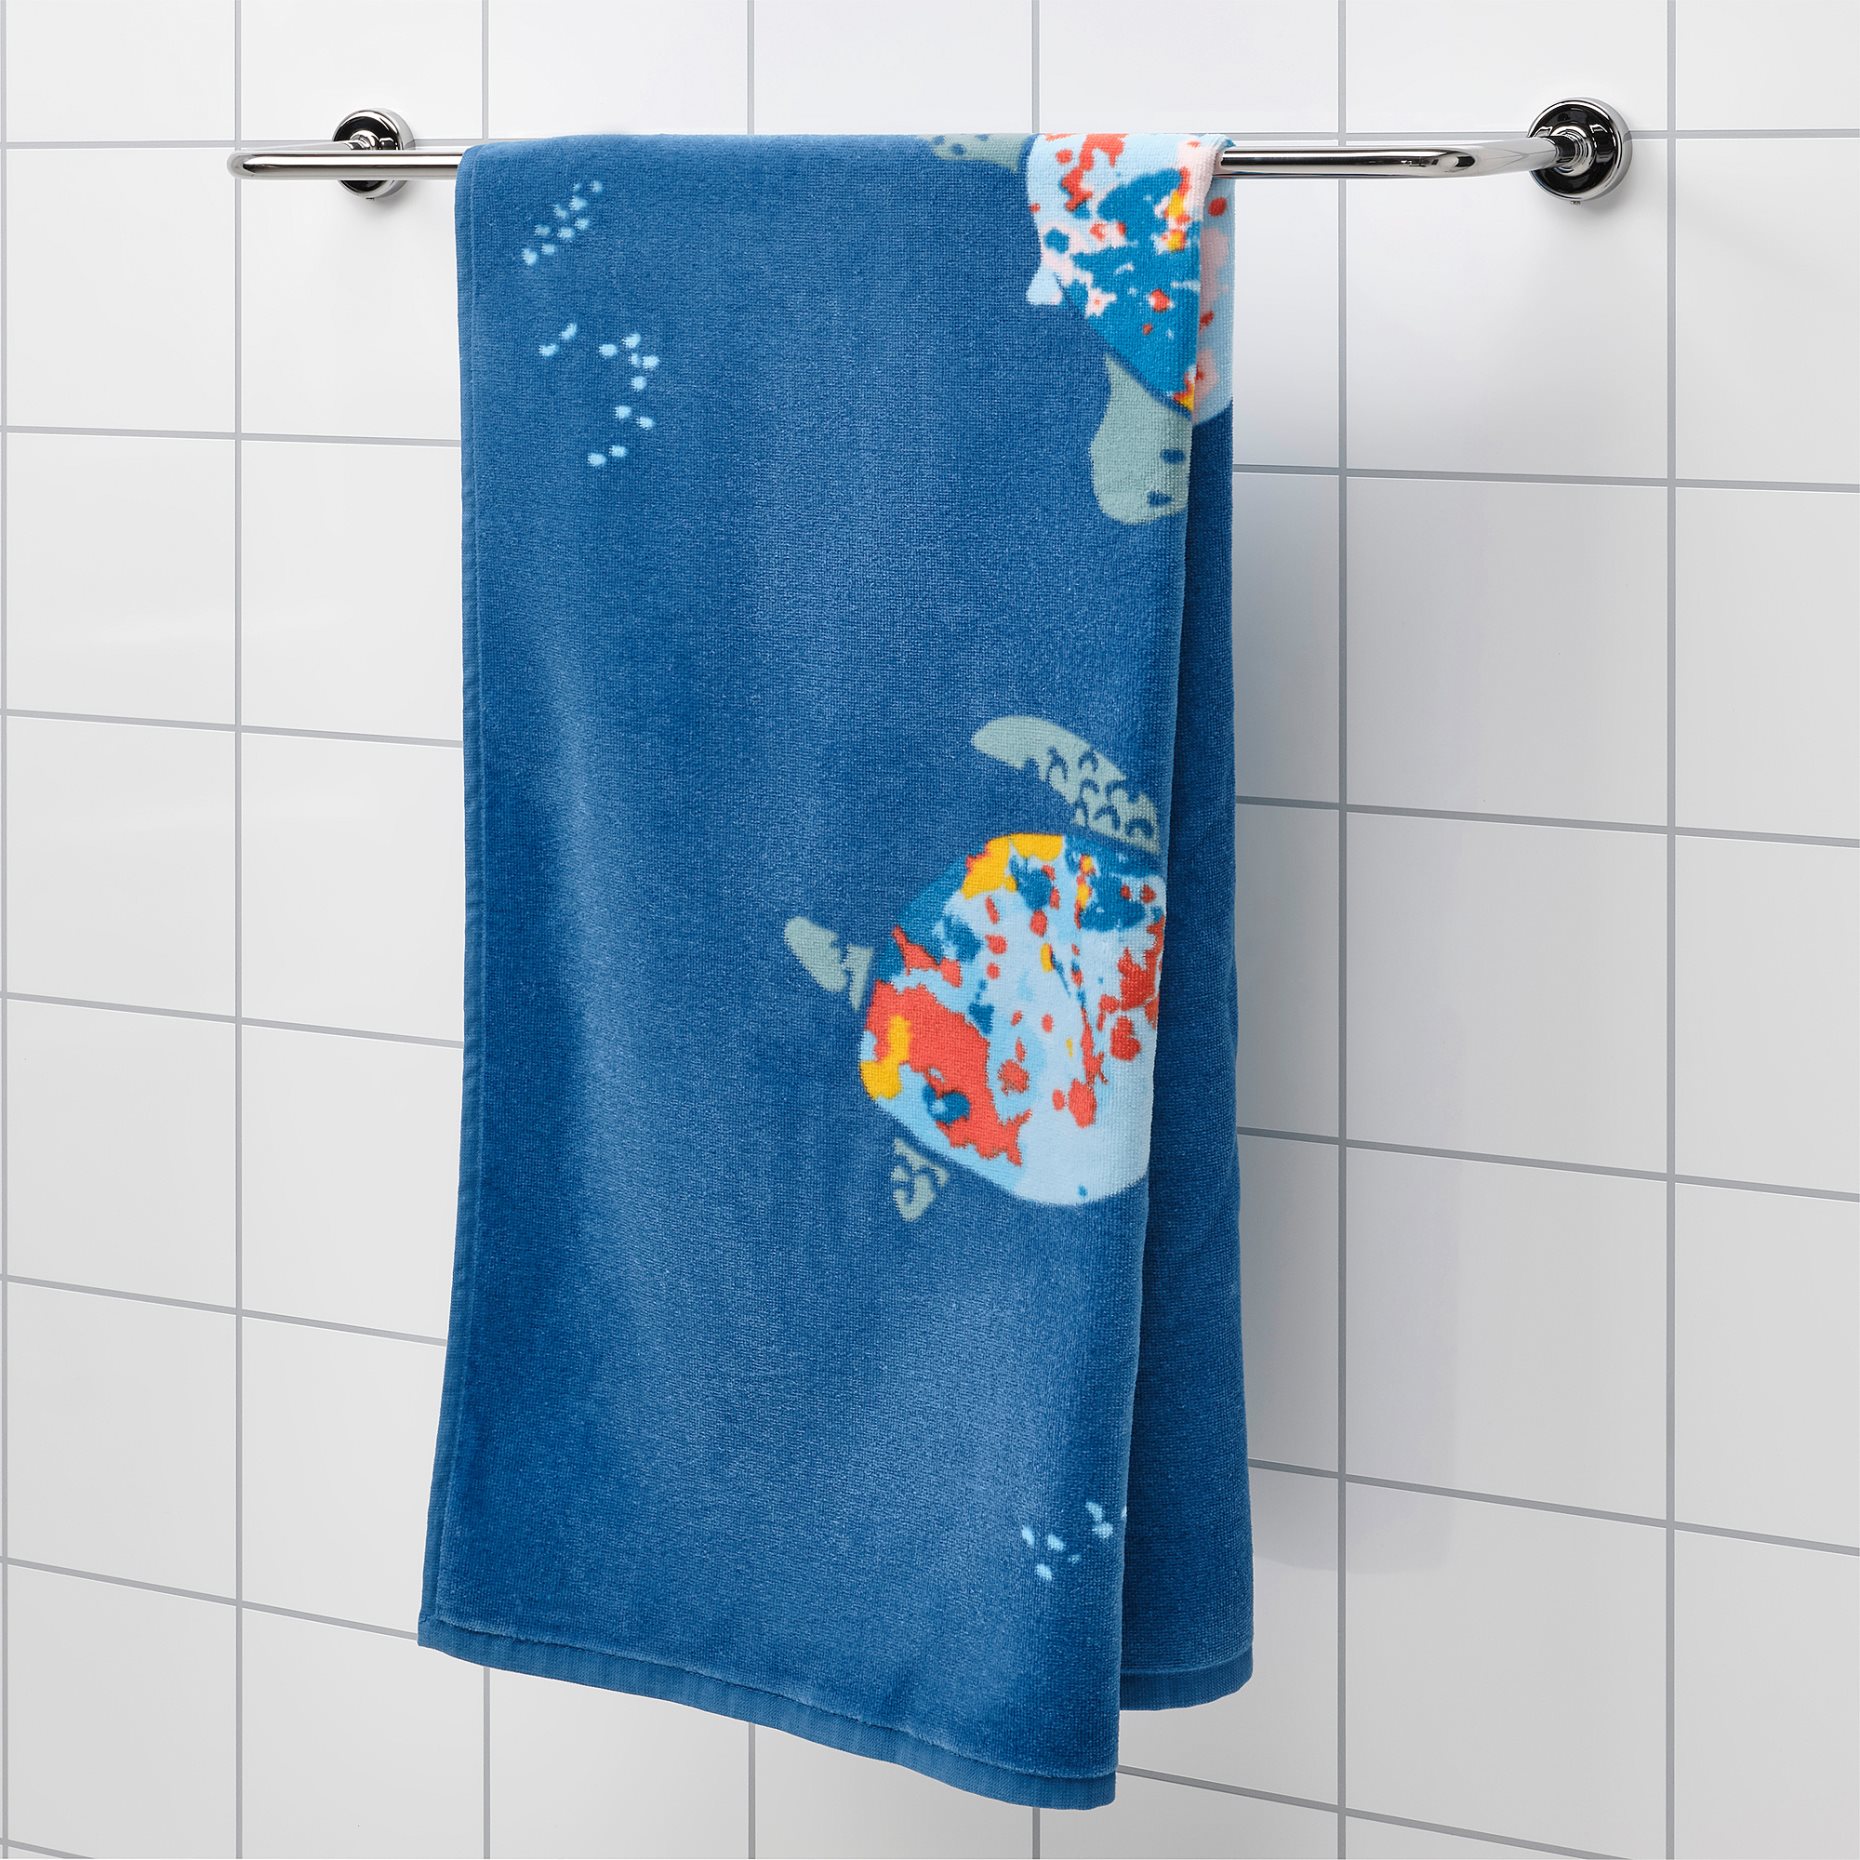 BLÅVINGAD, πετσέτα μπάνιου/μοτίβο χελώνας, 70x140 cm, 605.340.66